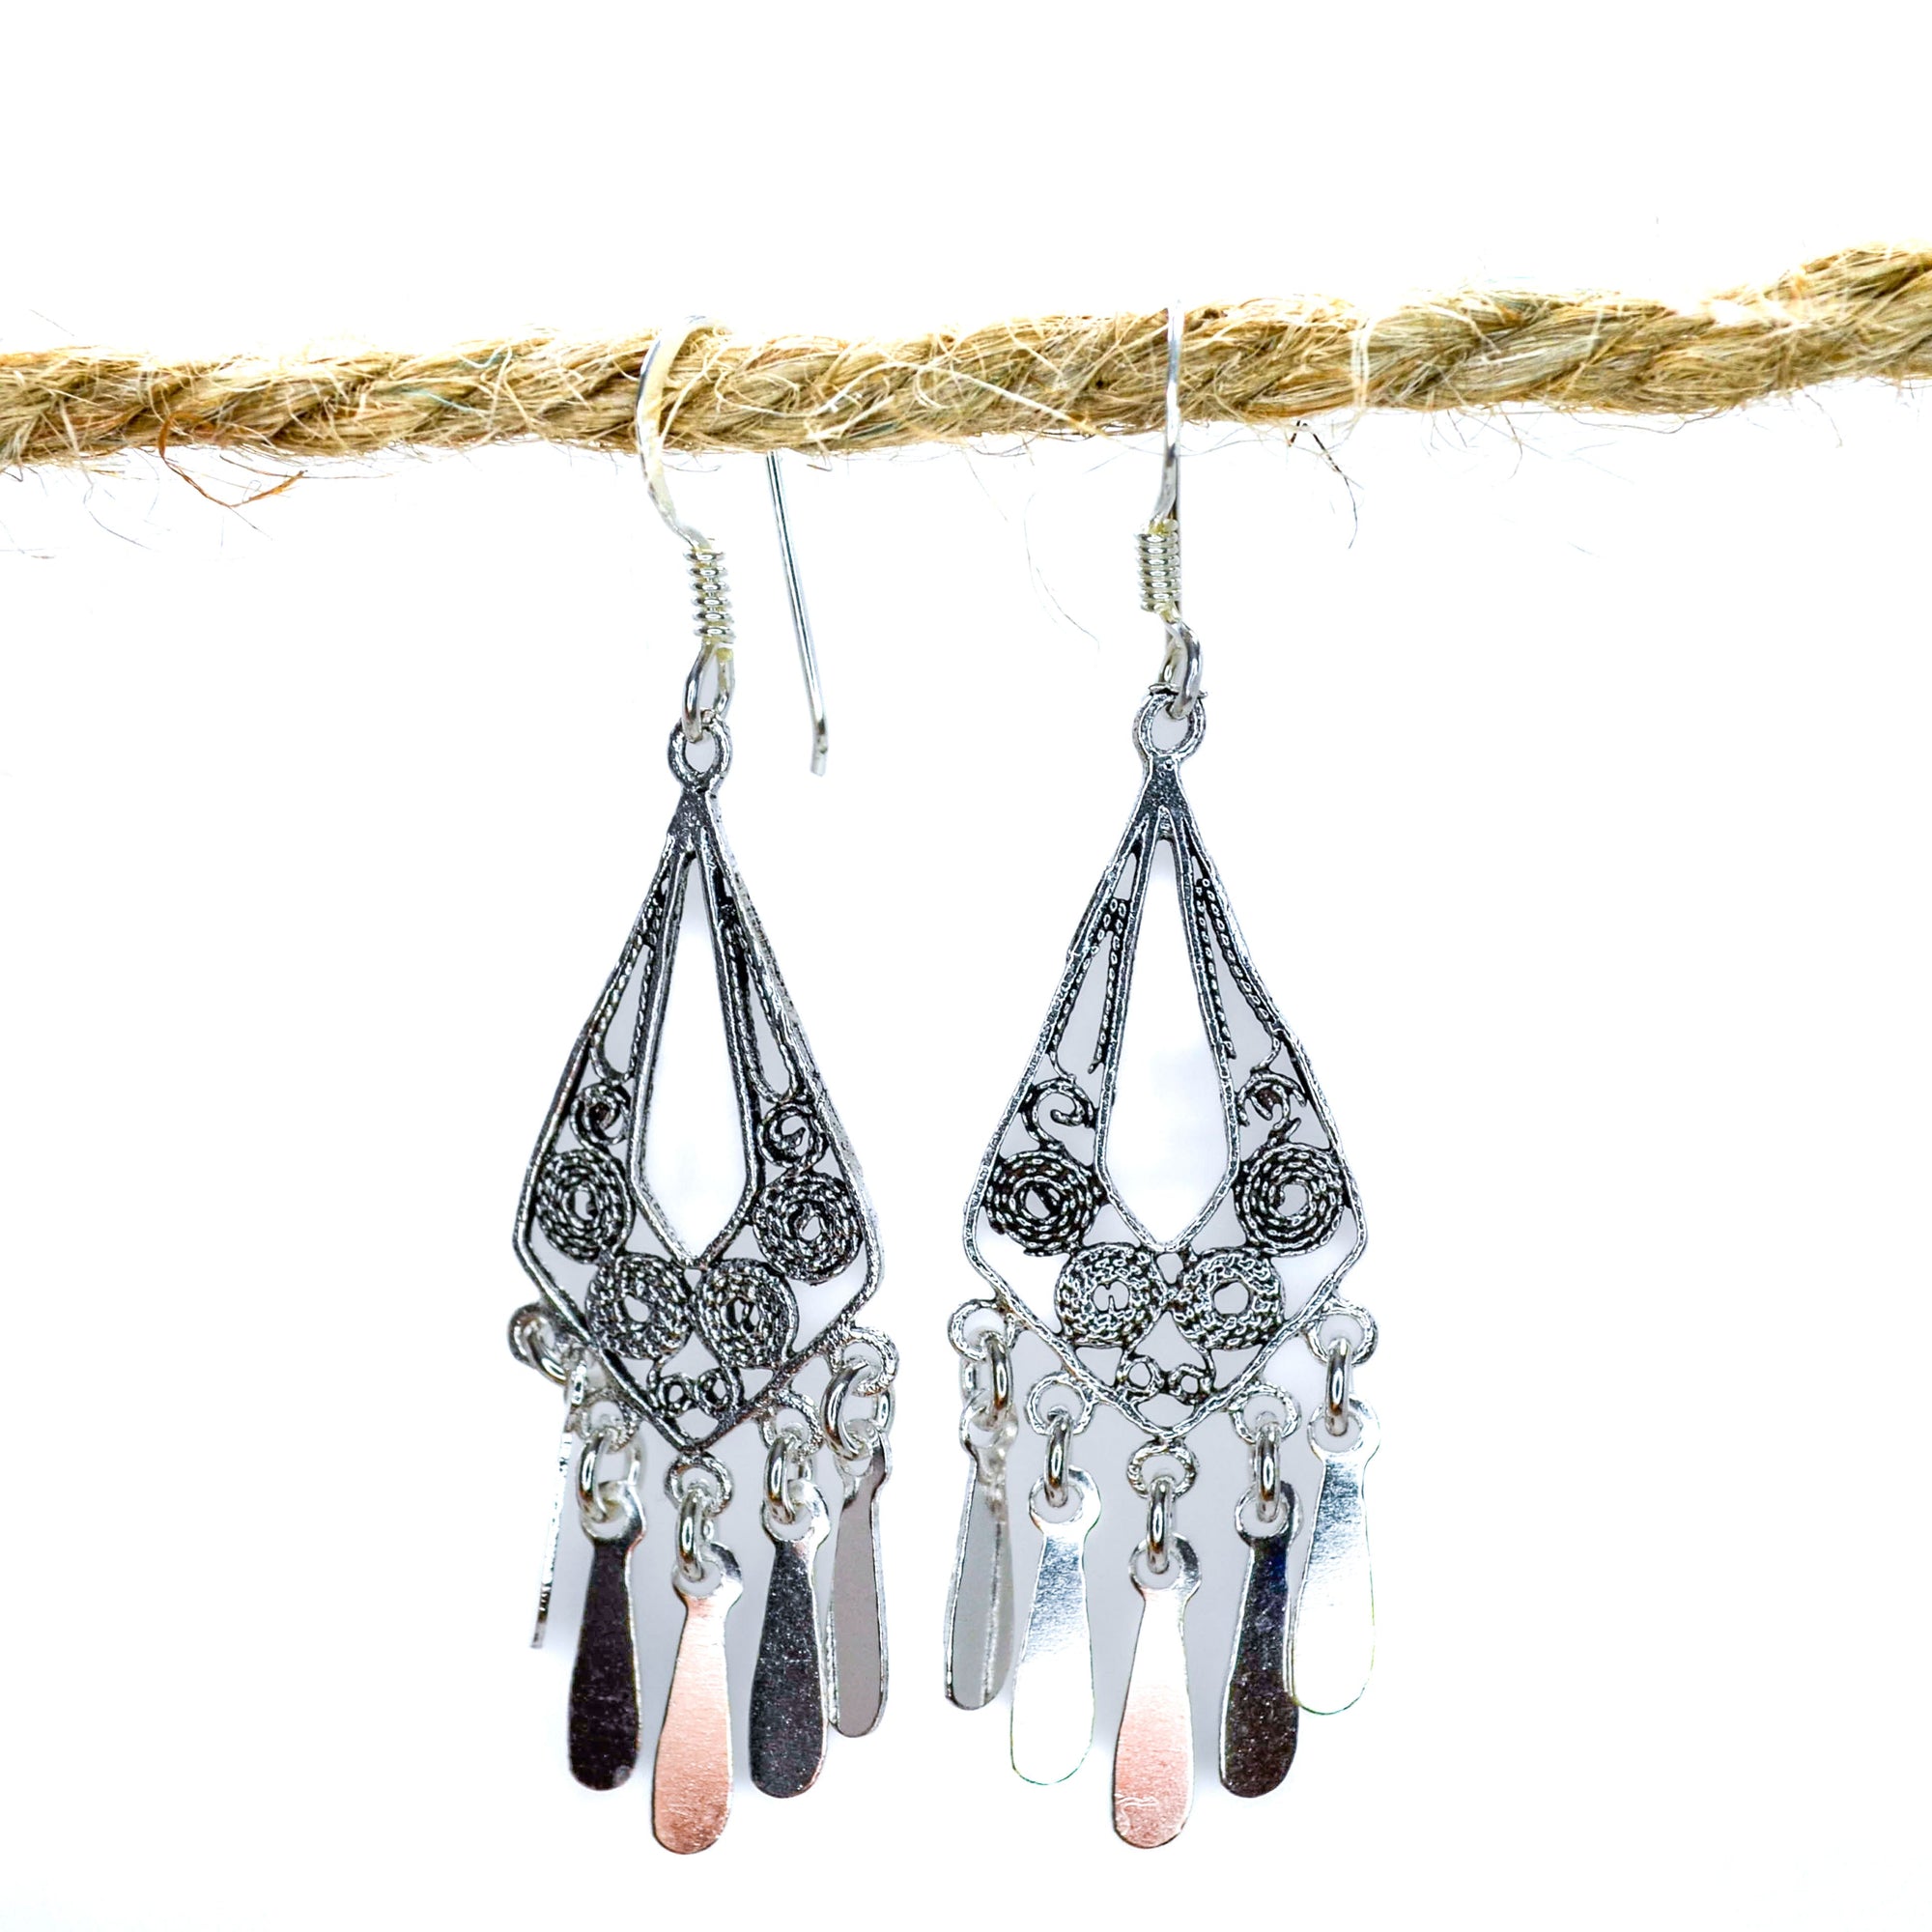 Triangular dangling earrings in silver with small swirl patterns inside 